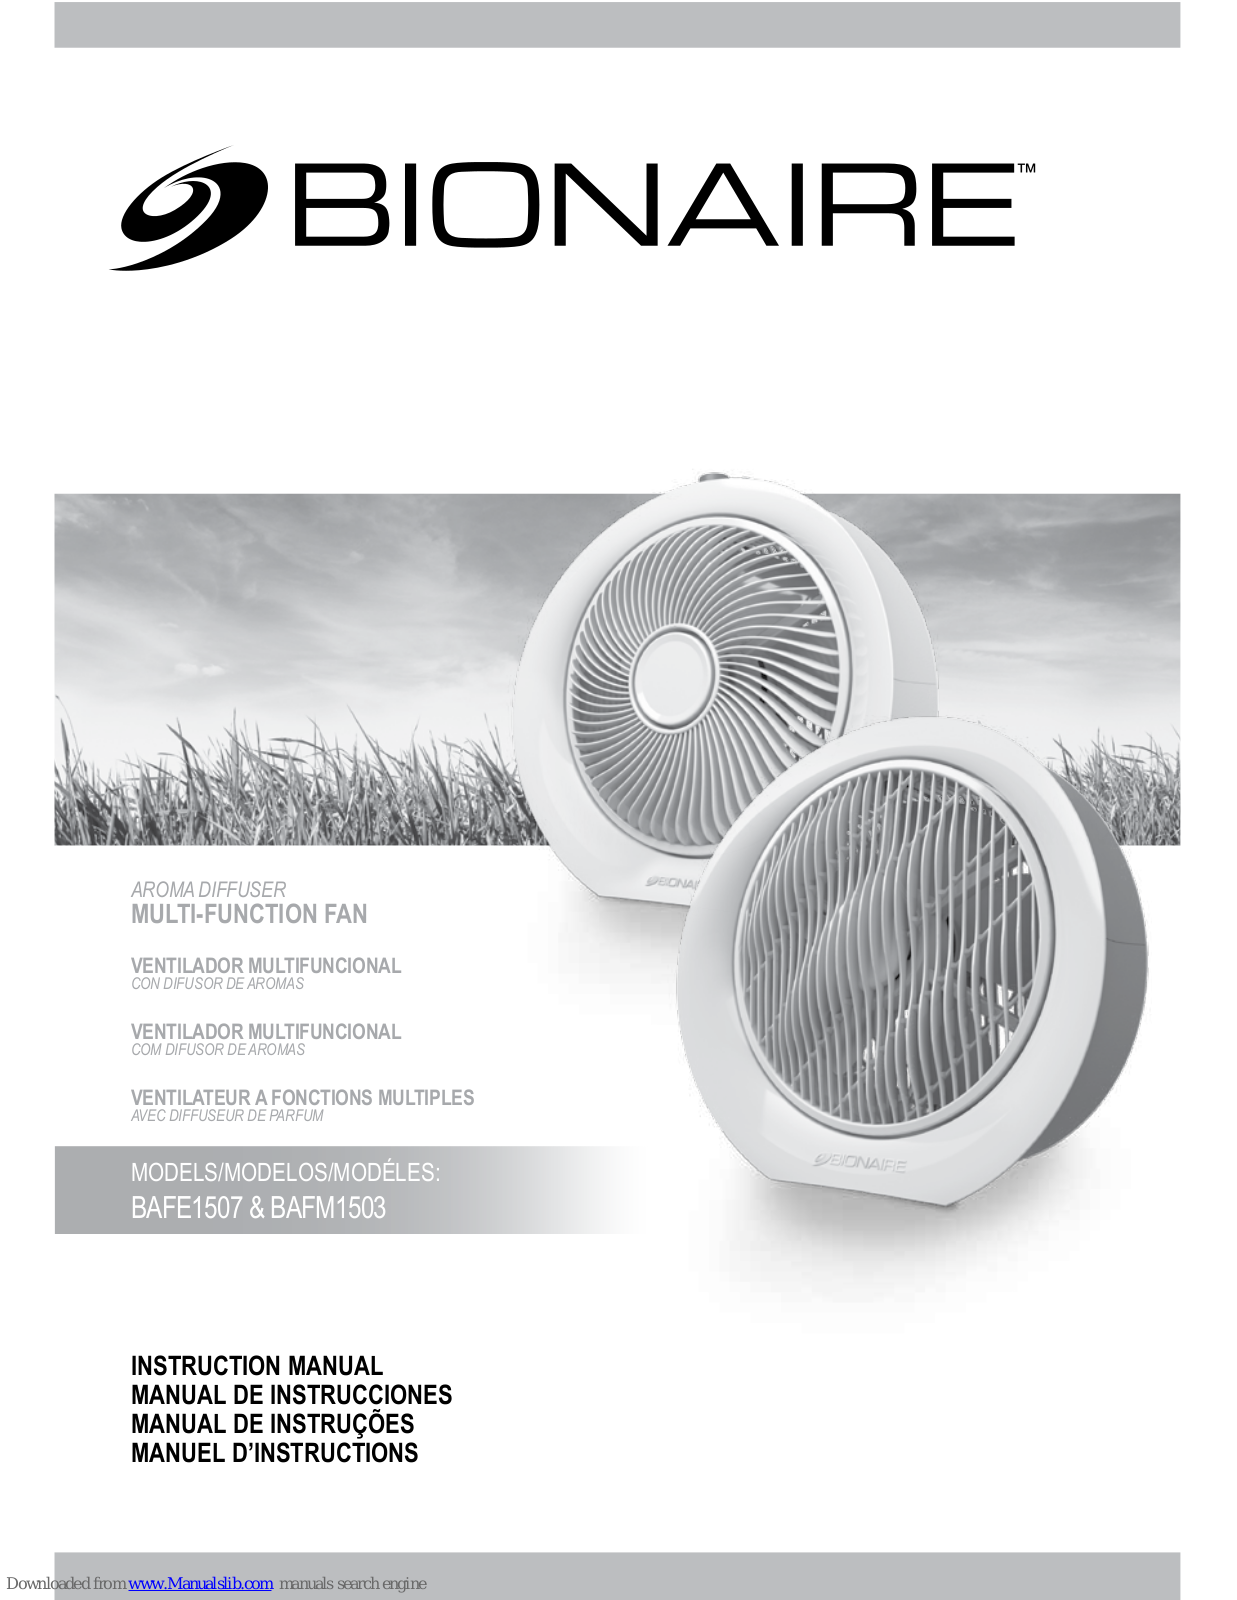 Bionaire BAFE1507, BAFM1503 Instruction Manual